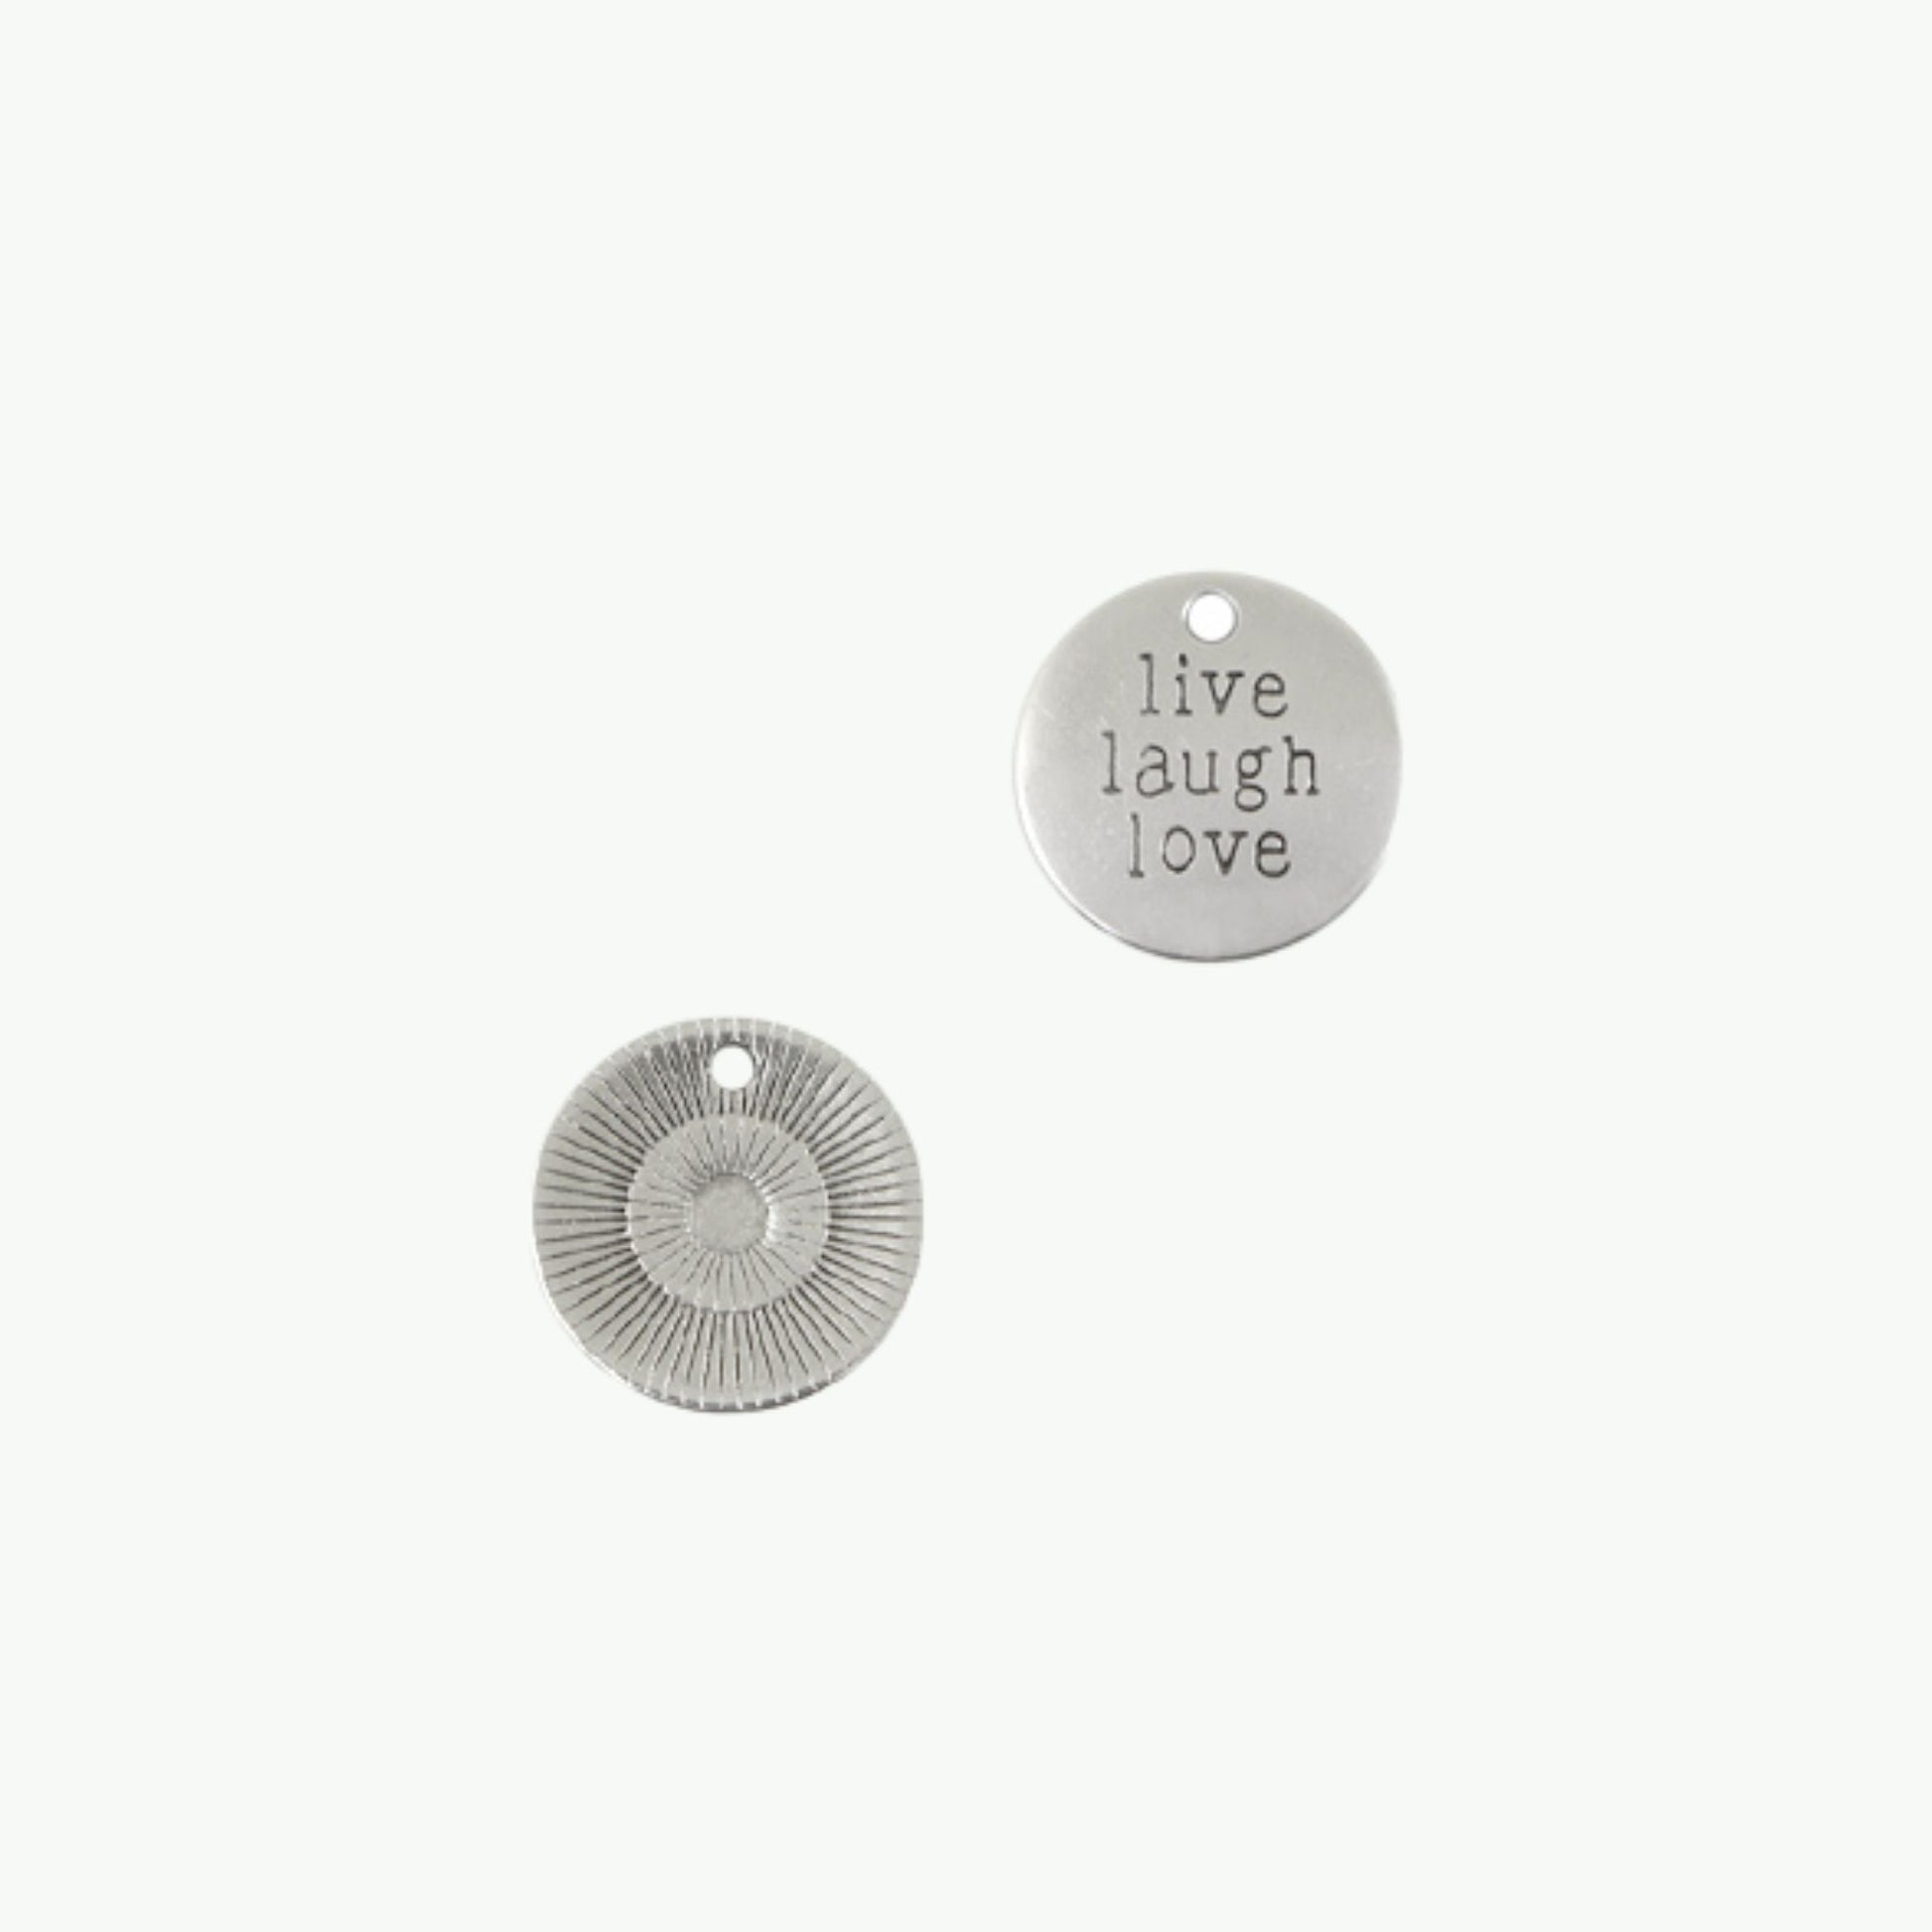 DQ amuletid "Live-Laugh-Love" 19mm, 999 hõbeda kattega